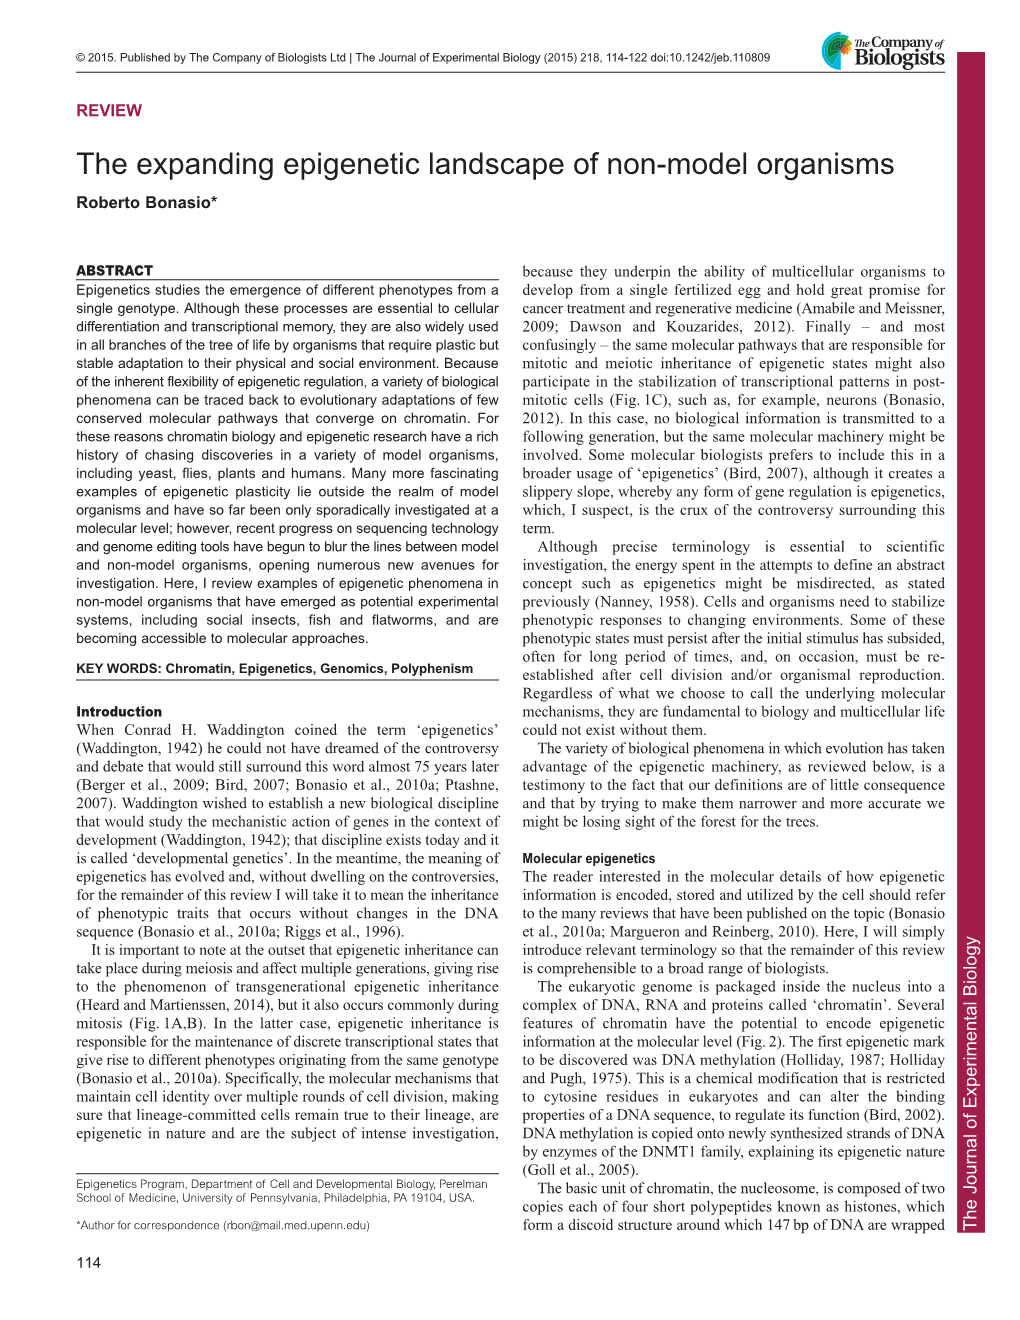 The Expanding Epigenetic Landscape of Non-Model Organisms